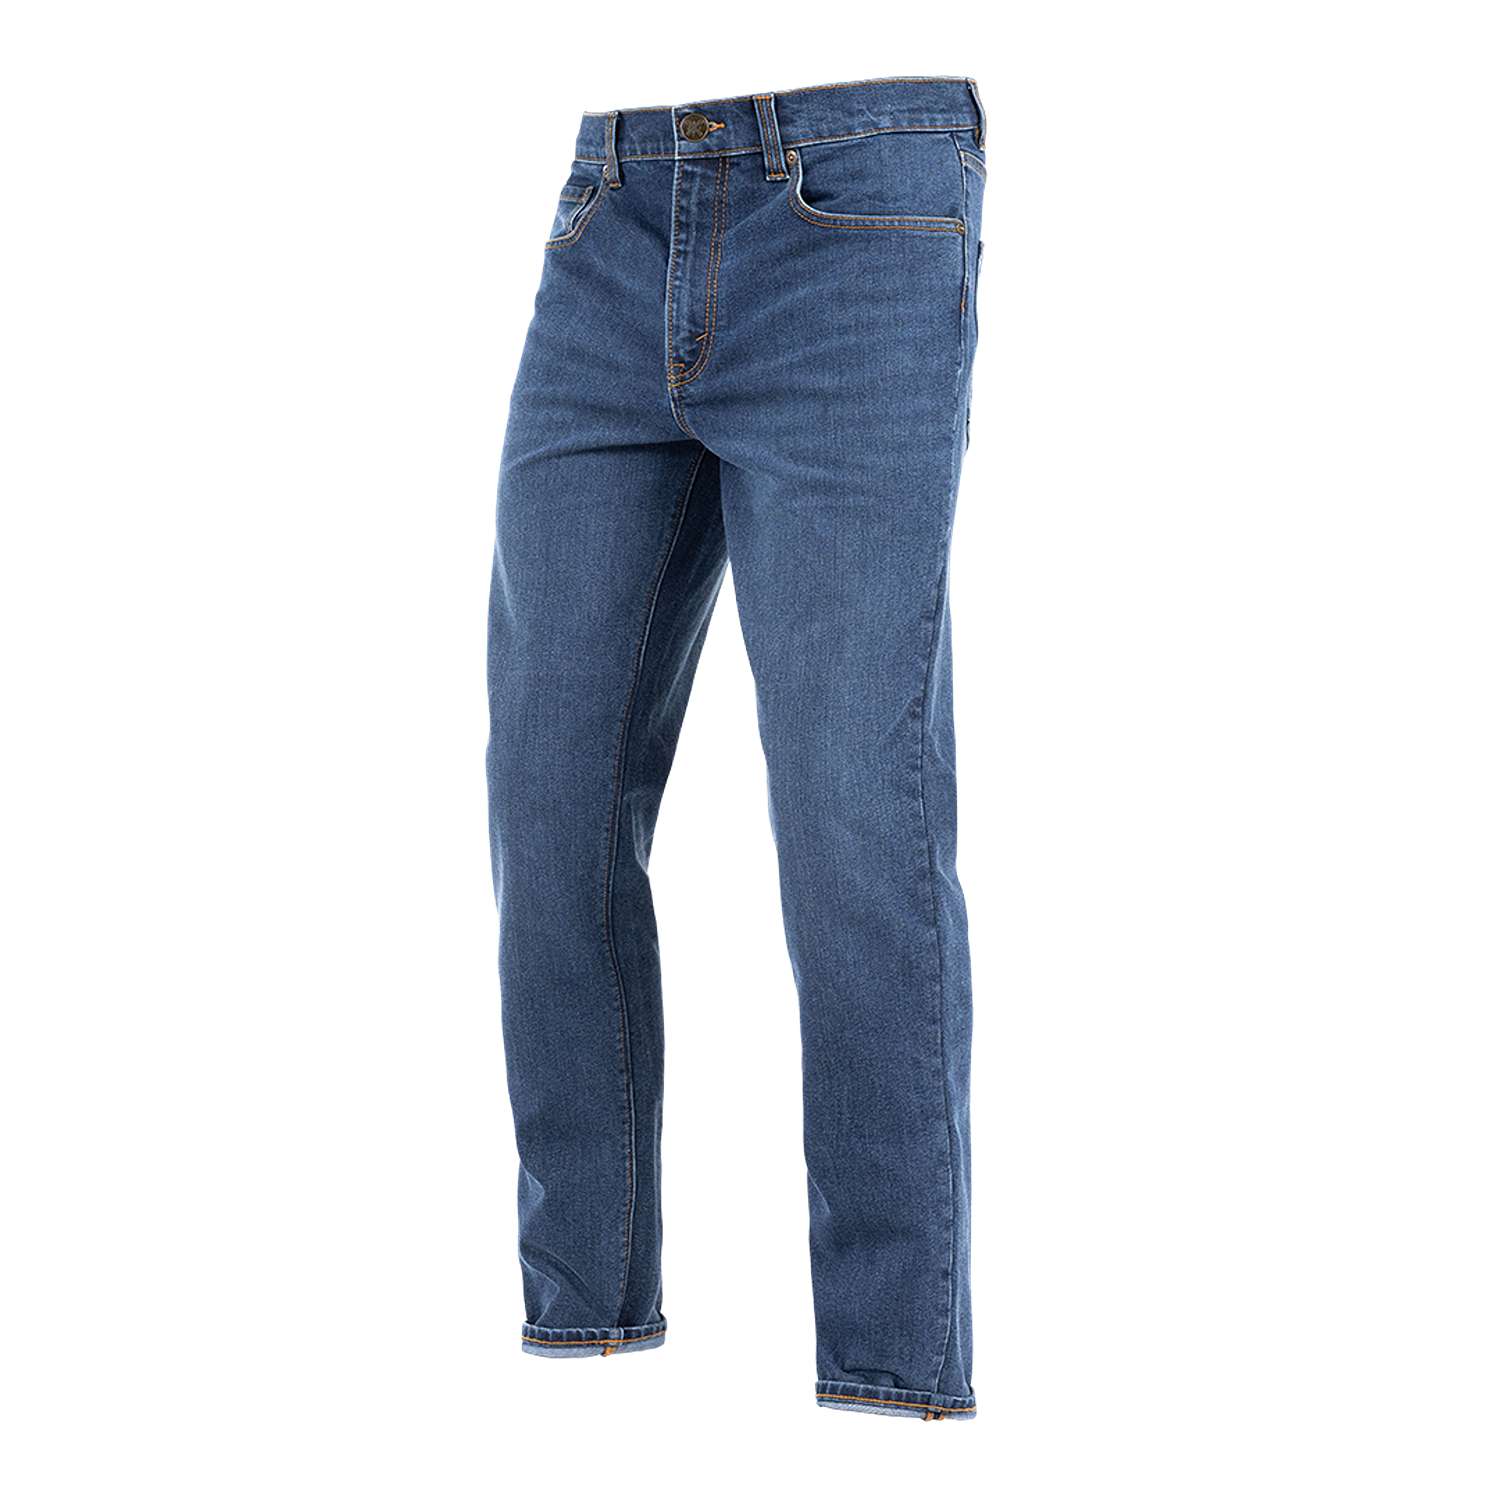 John Doe Classic Tapered Jeans Indigo Size W31/L32